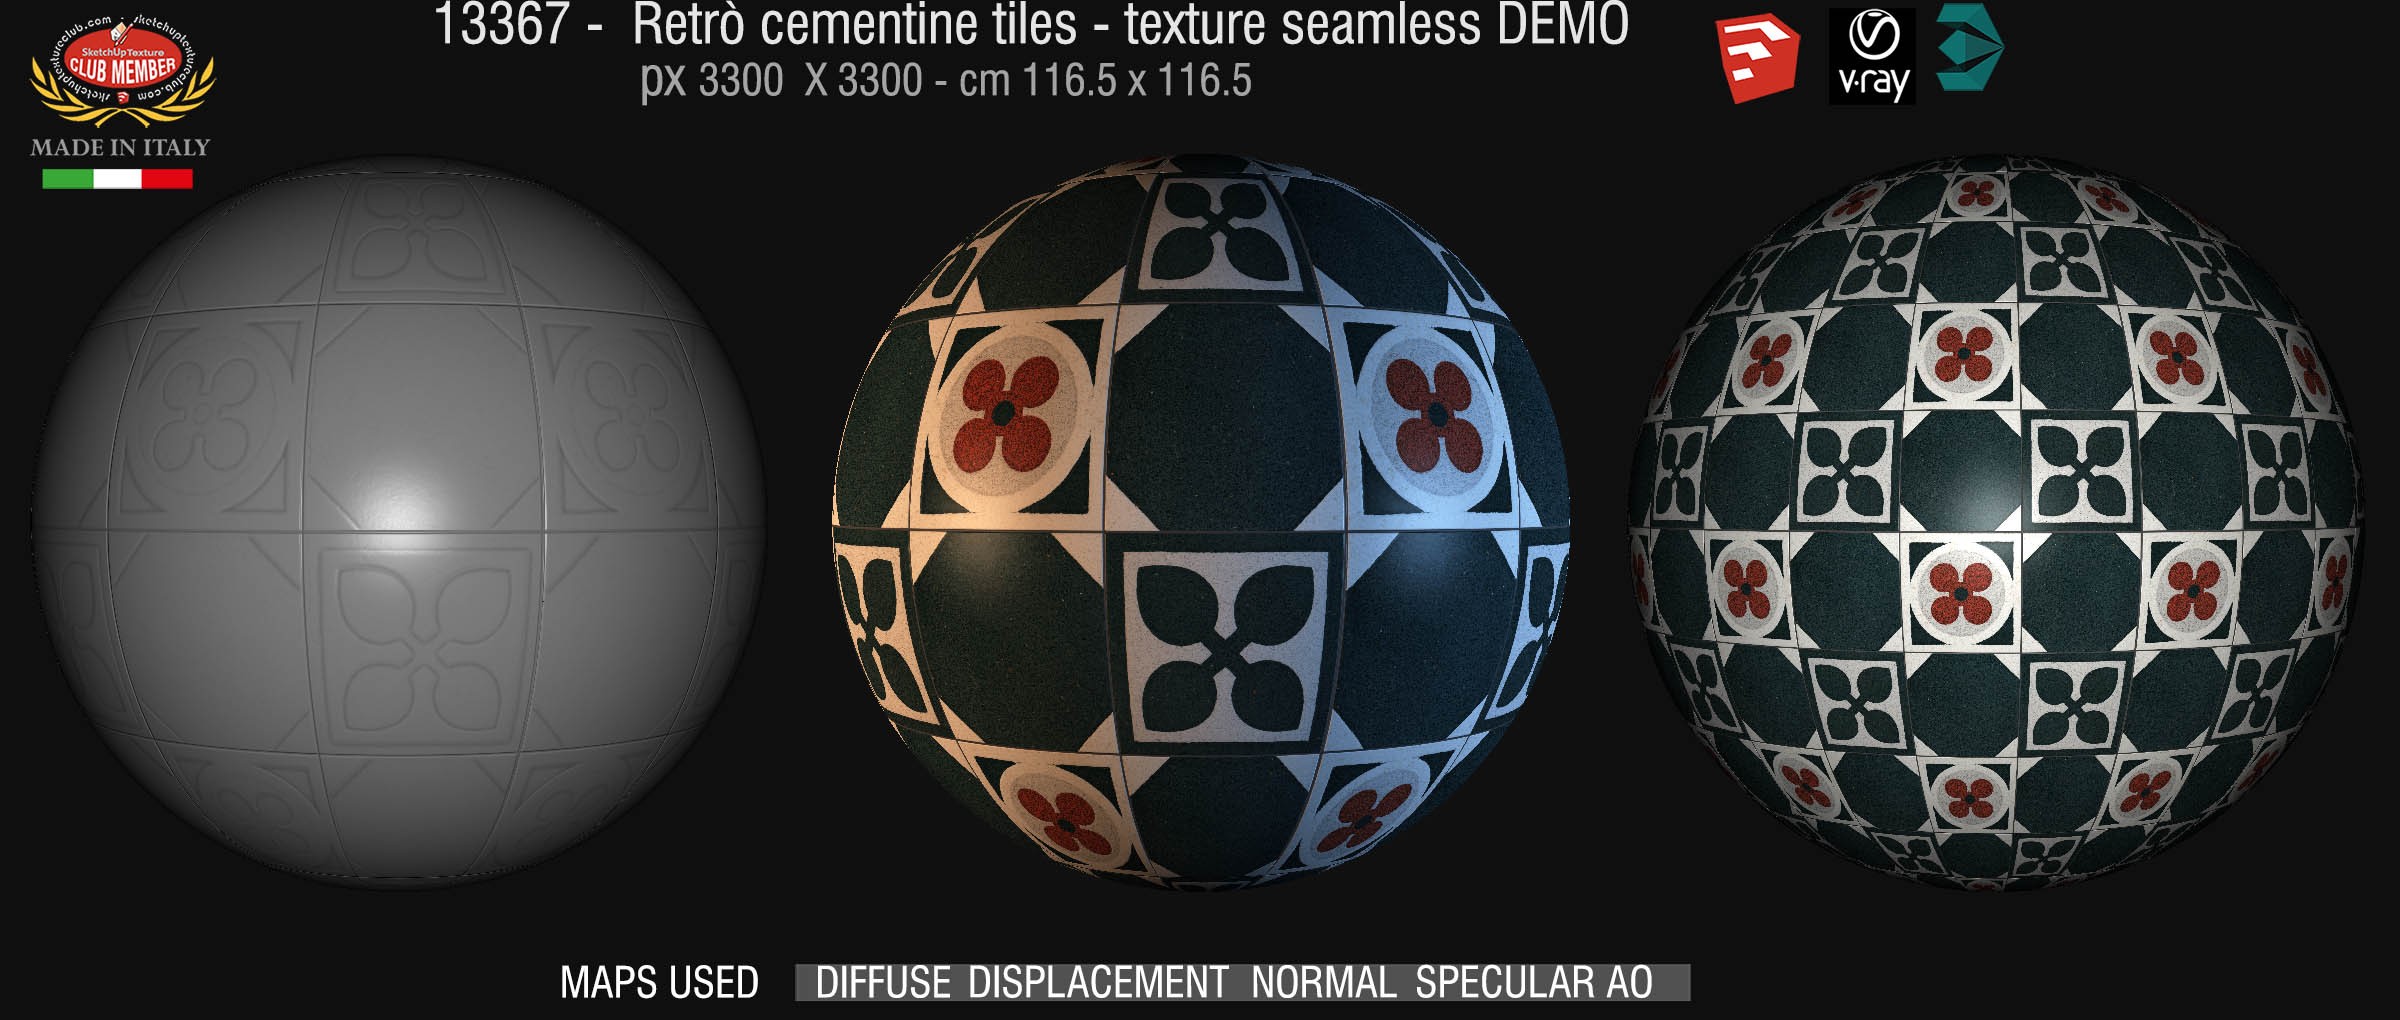 13367 retrò cementine tiles - texture seamless + maps DEMO